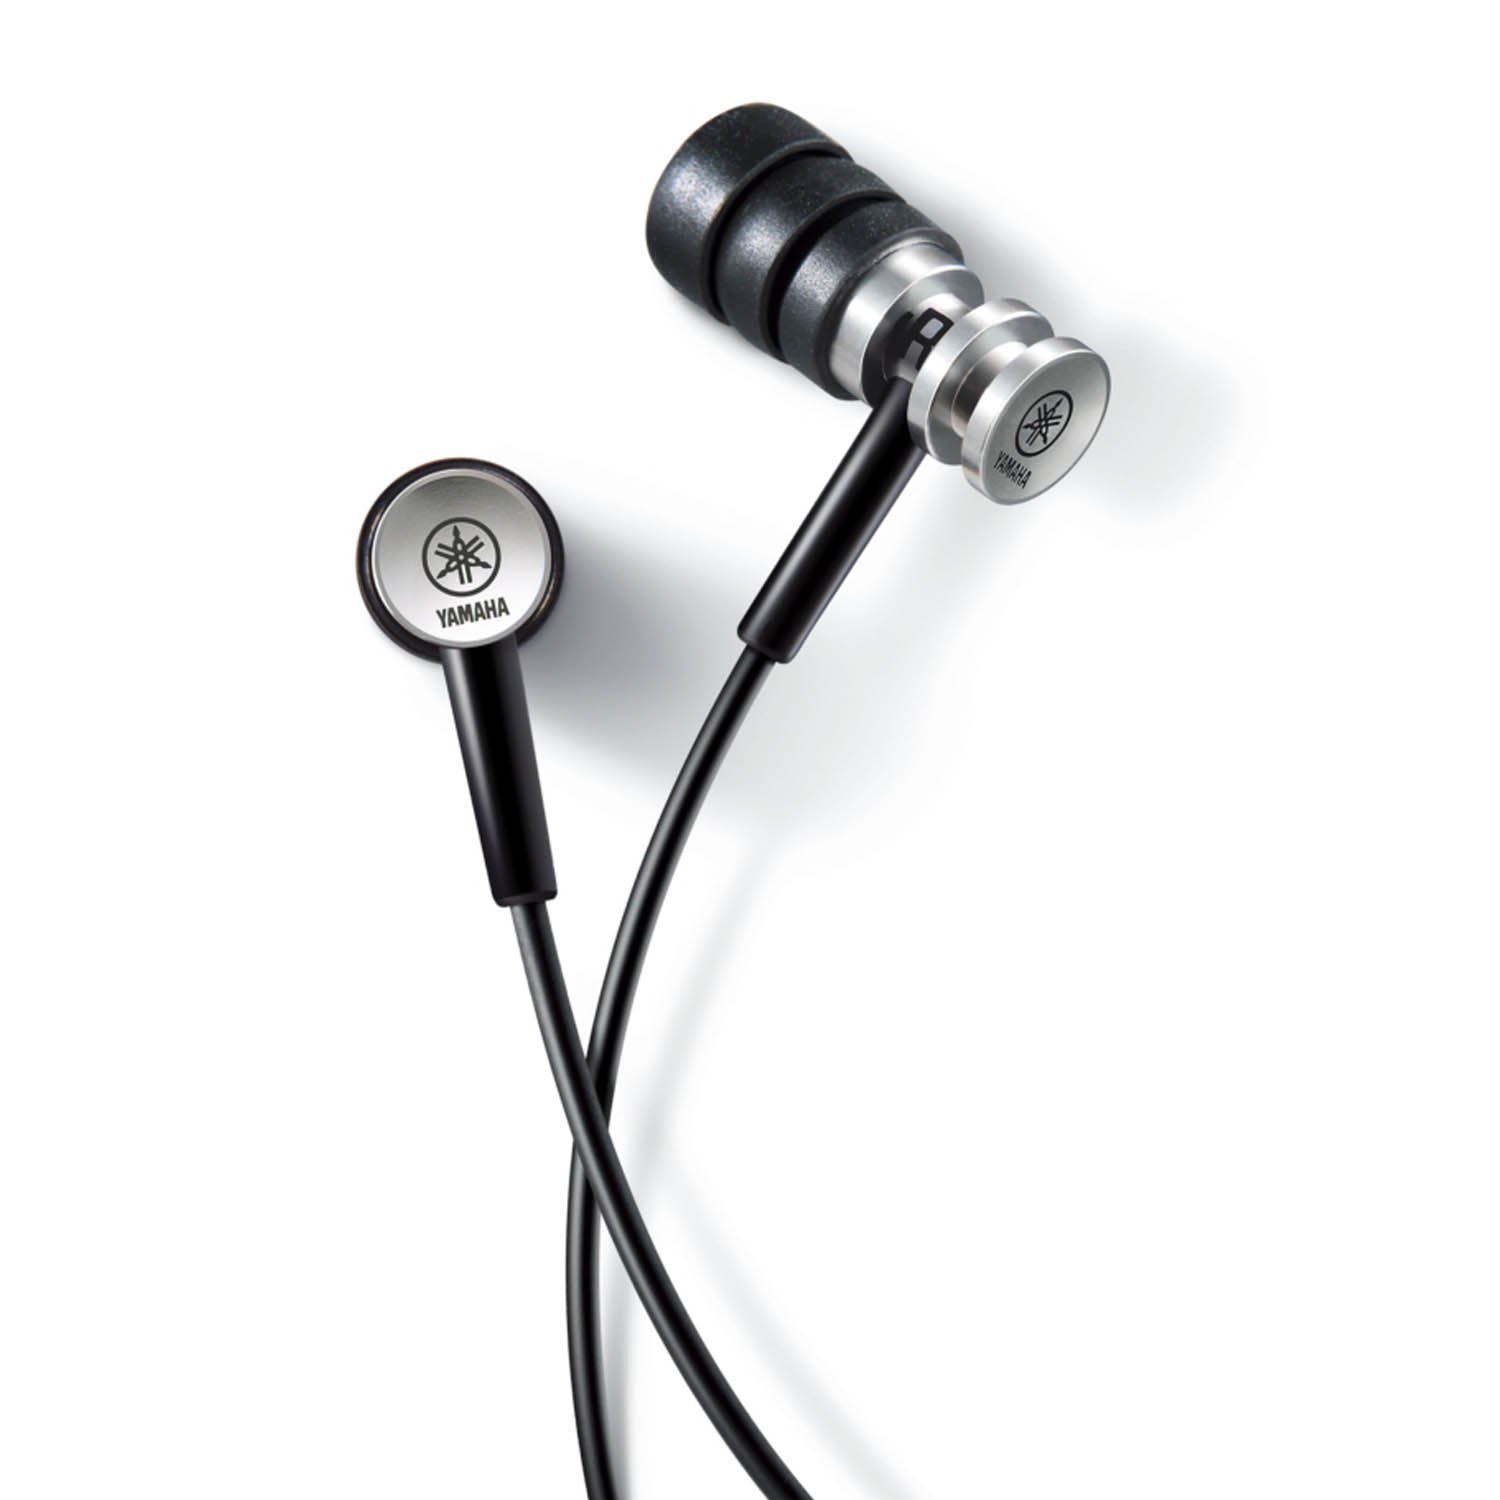 YAMAHA 雅马哈 EPH-100 Si 高品质头戴式耳机 银色 更动人的细节 更清澈浑厚低音470元